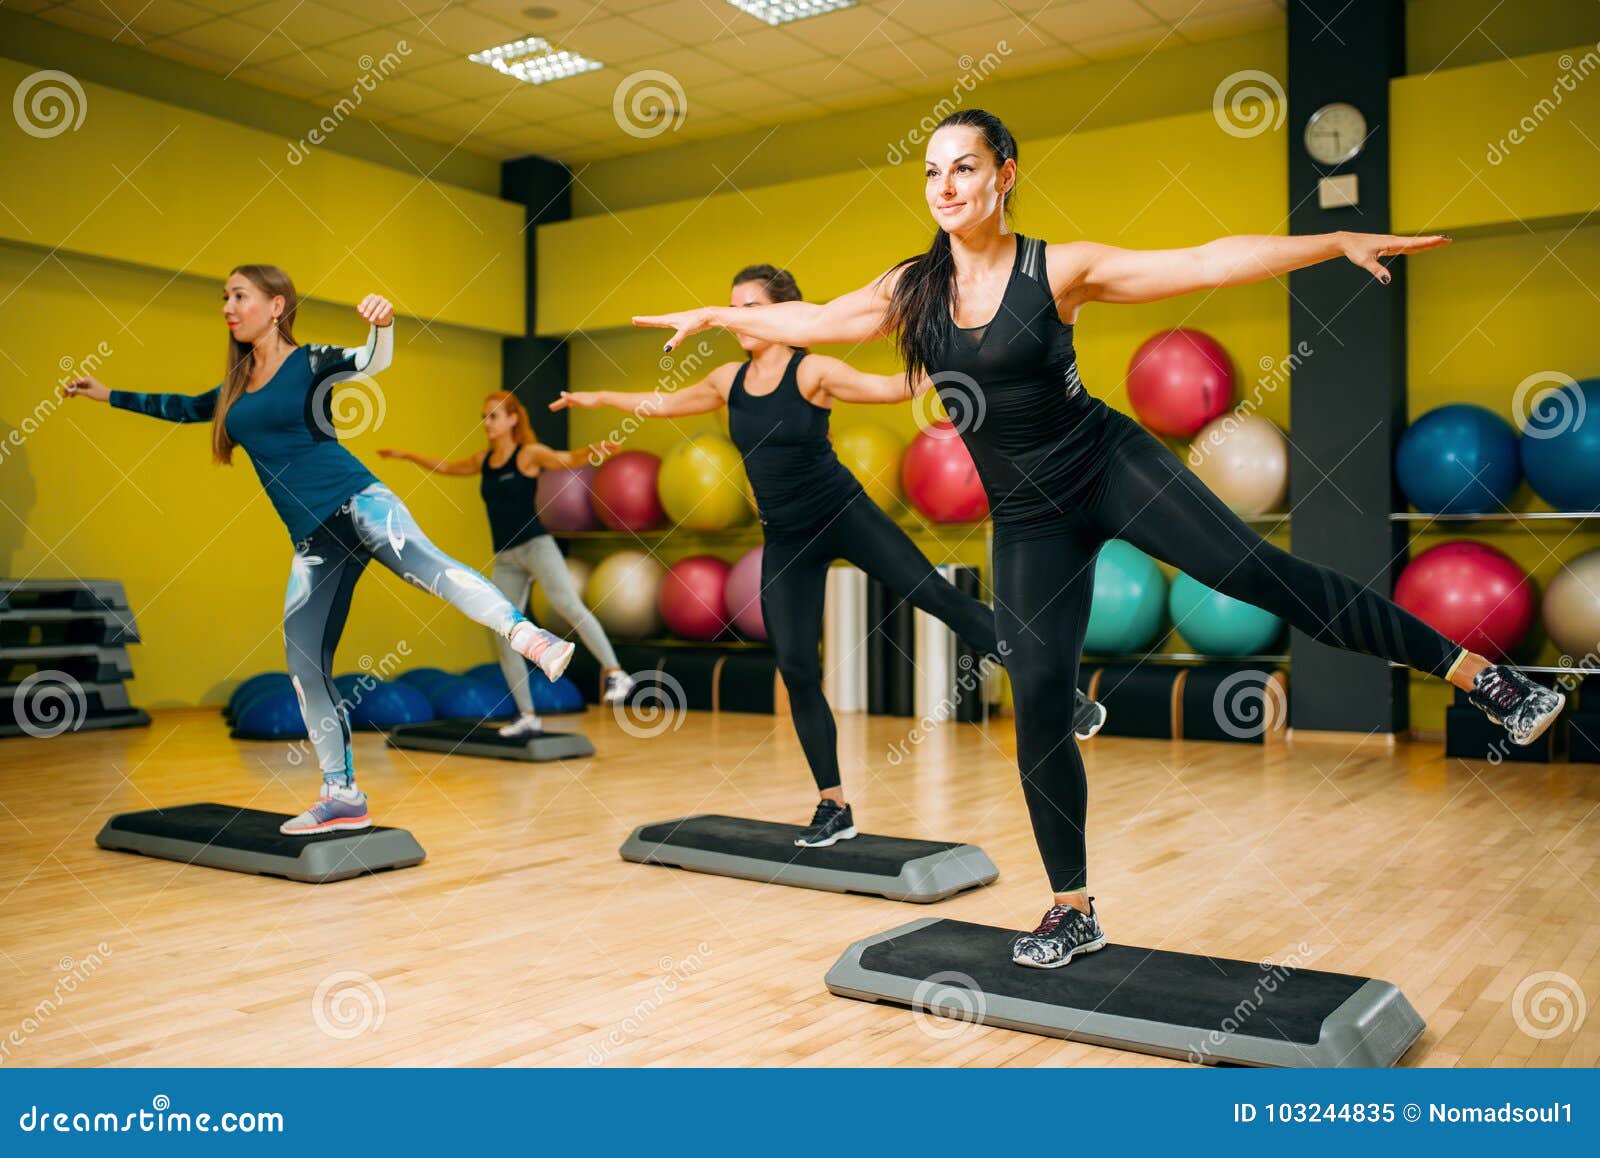 Women Group on Step Aerobic Training Stock Image - Image of coach